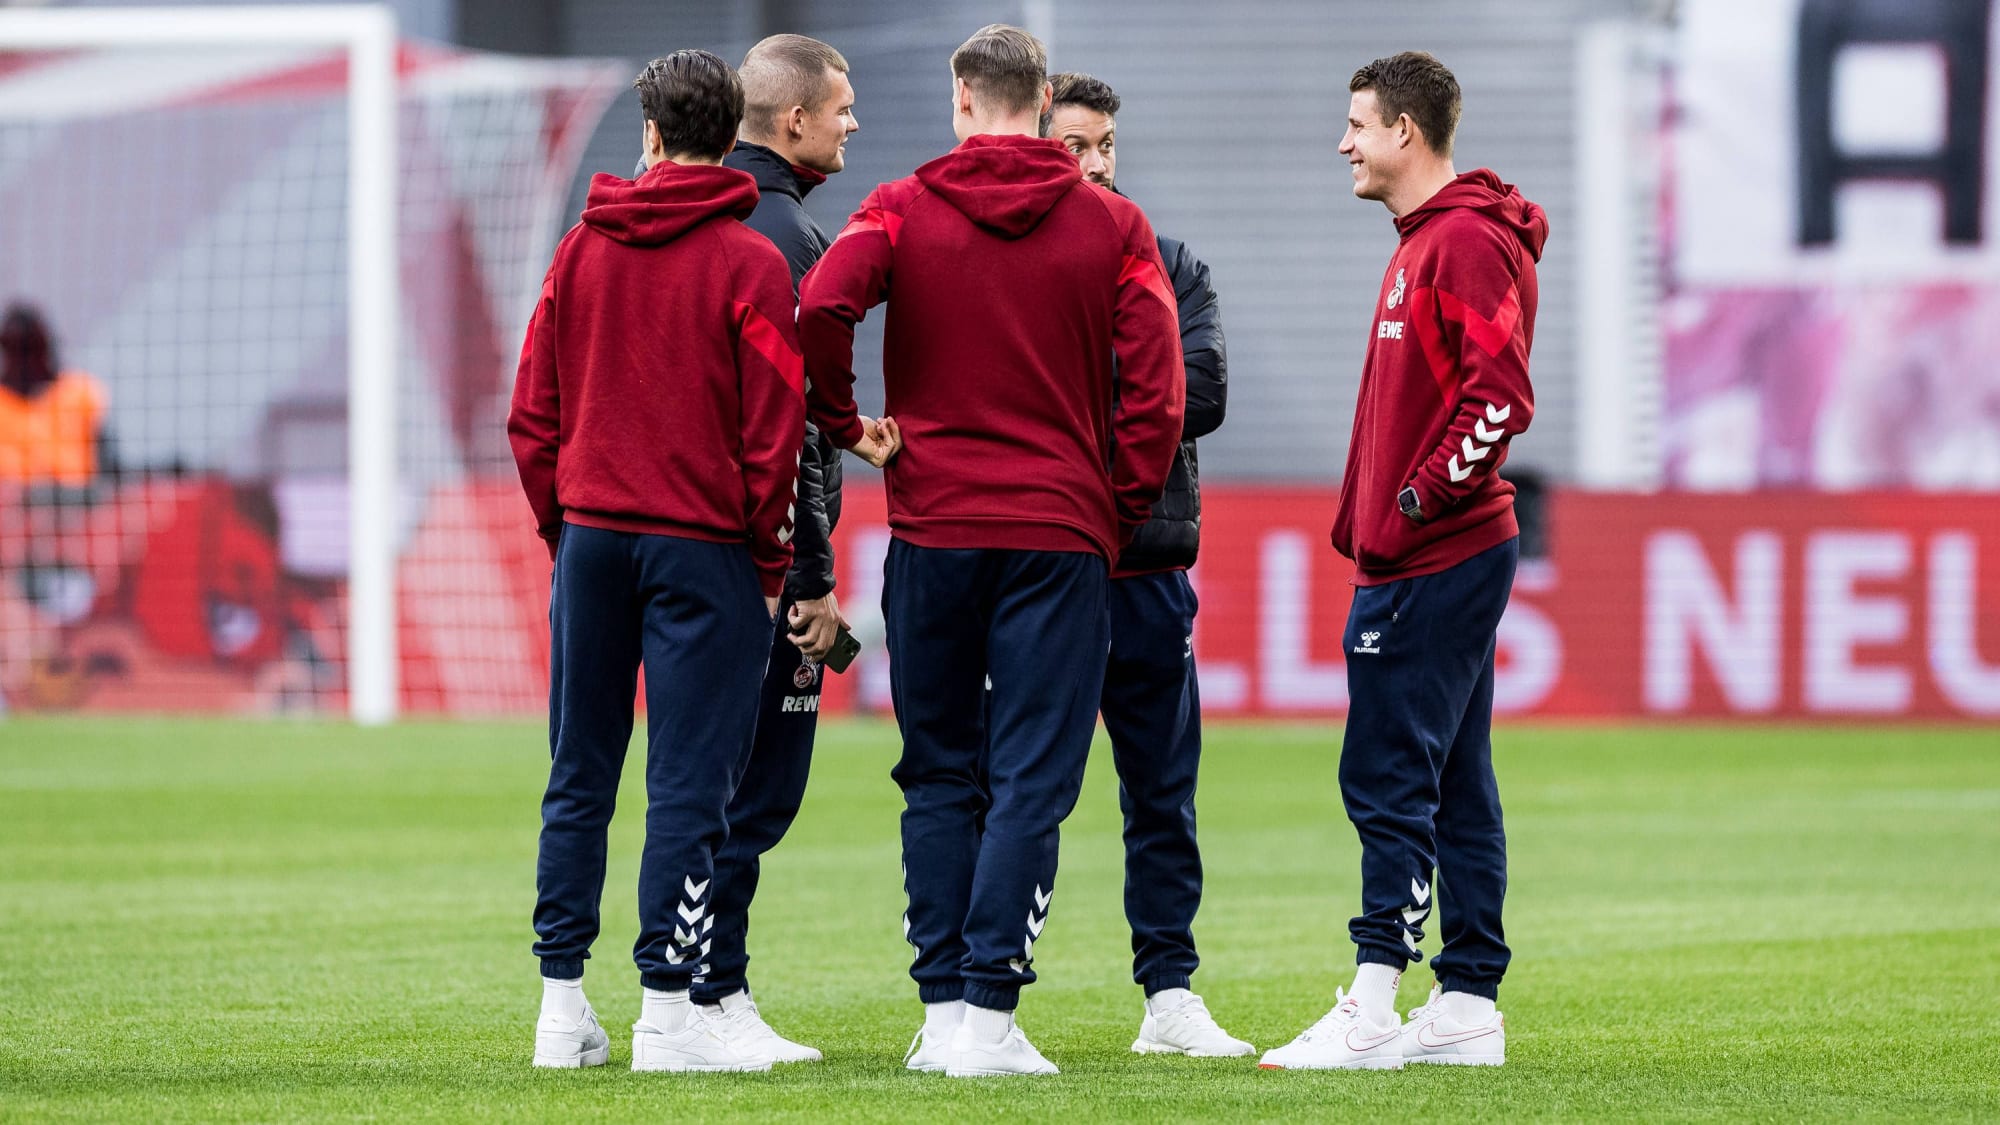 Denis Huseinbasic (1. FC Koeln, 8), Luca Kilian (1. FC Koeln, 15), Steffen Tigges (1. FC Koeln, 21), Mark Uth (1. FC Koeln, 13), Dominique Heintz (1. FC Koeln, 3)